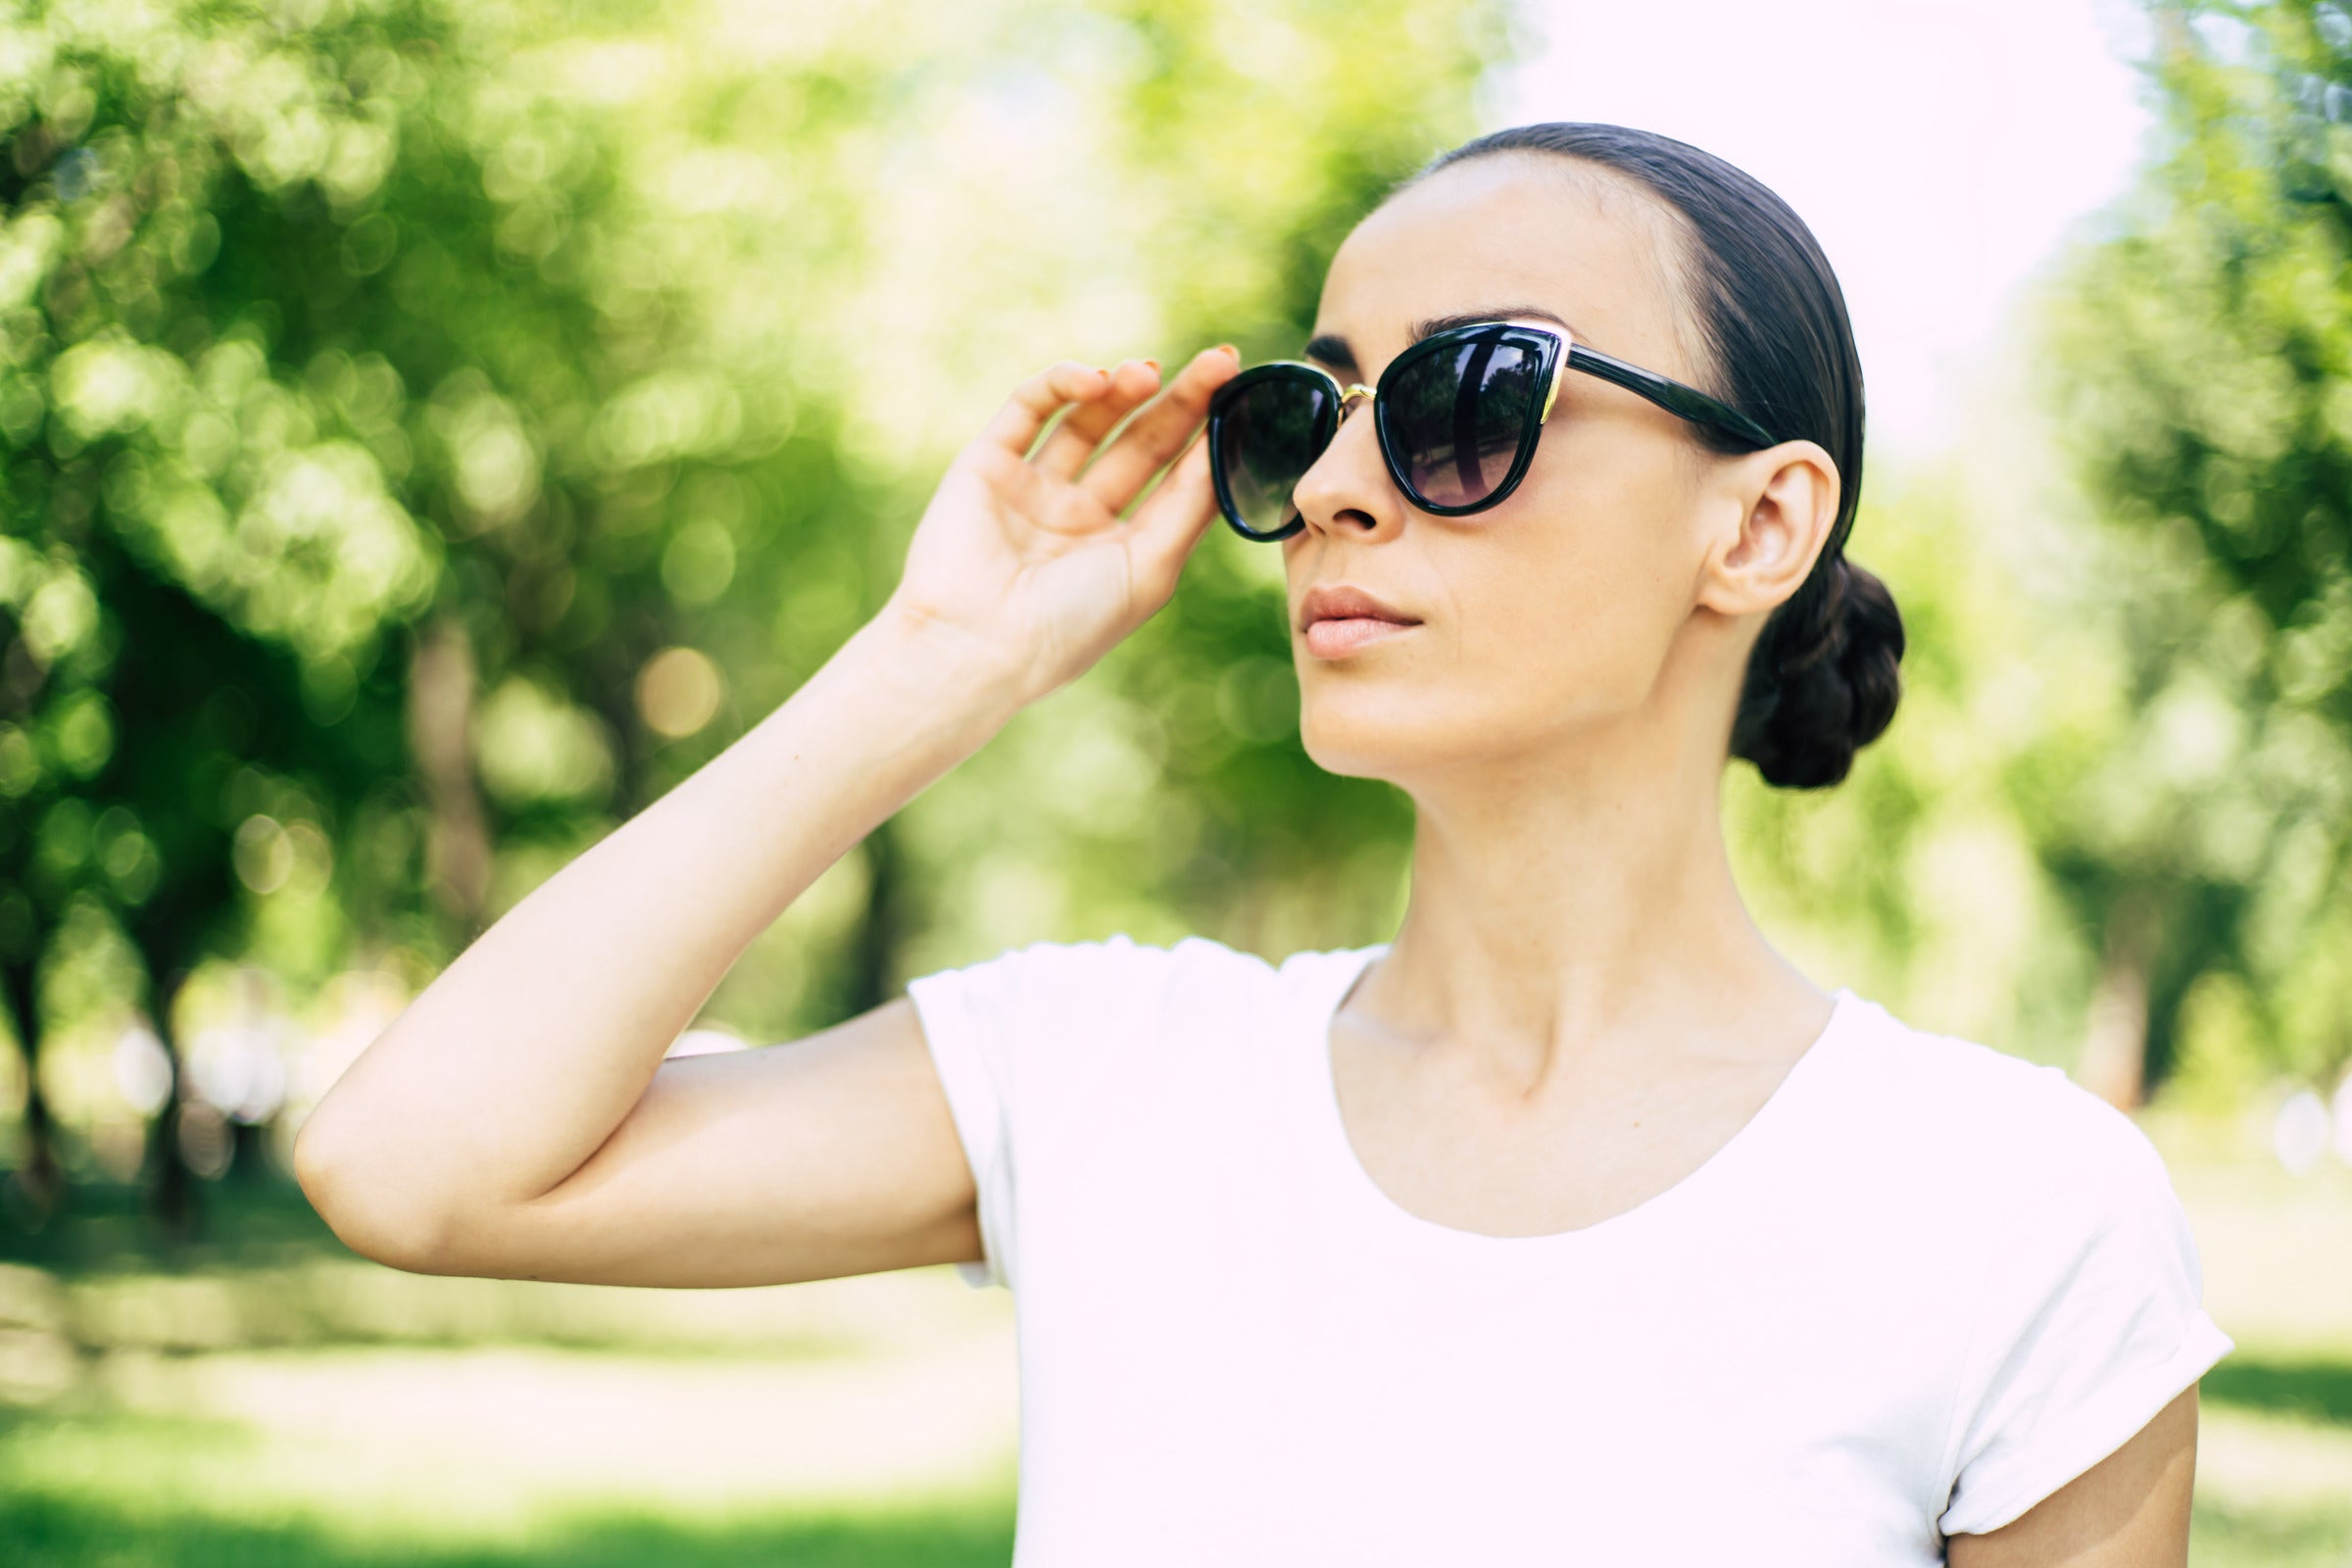 Wear protective eyewear to prevent sunburned eyes